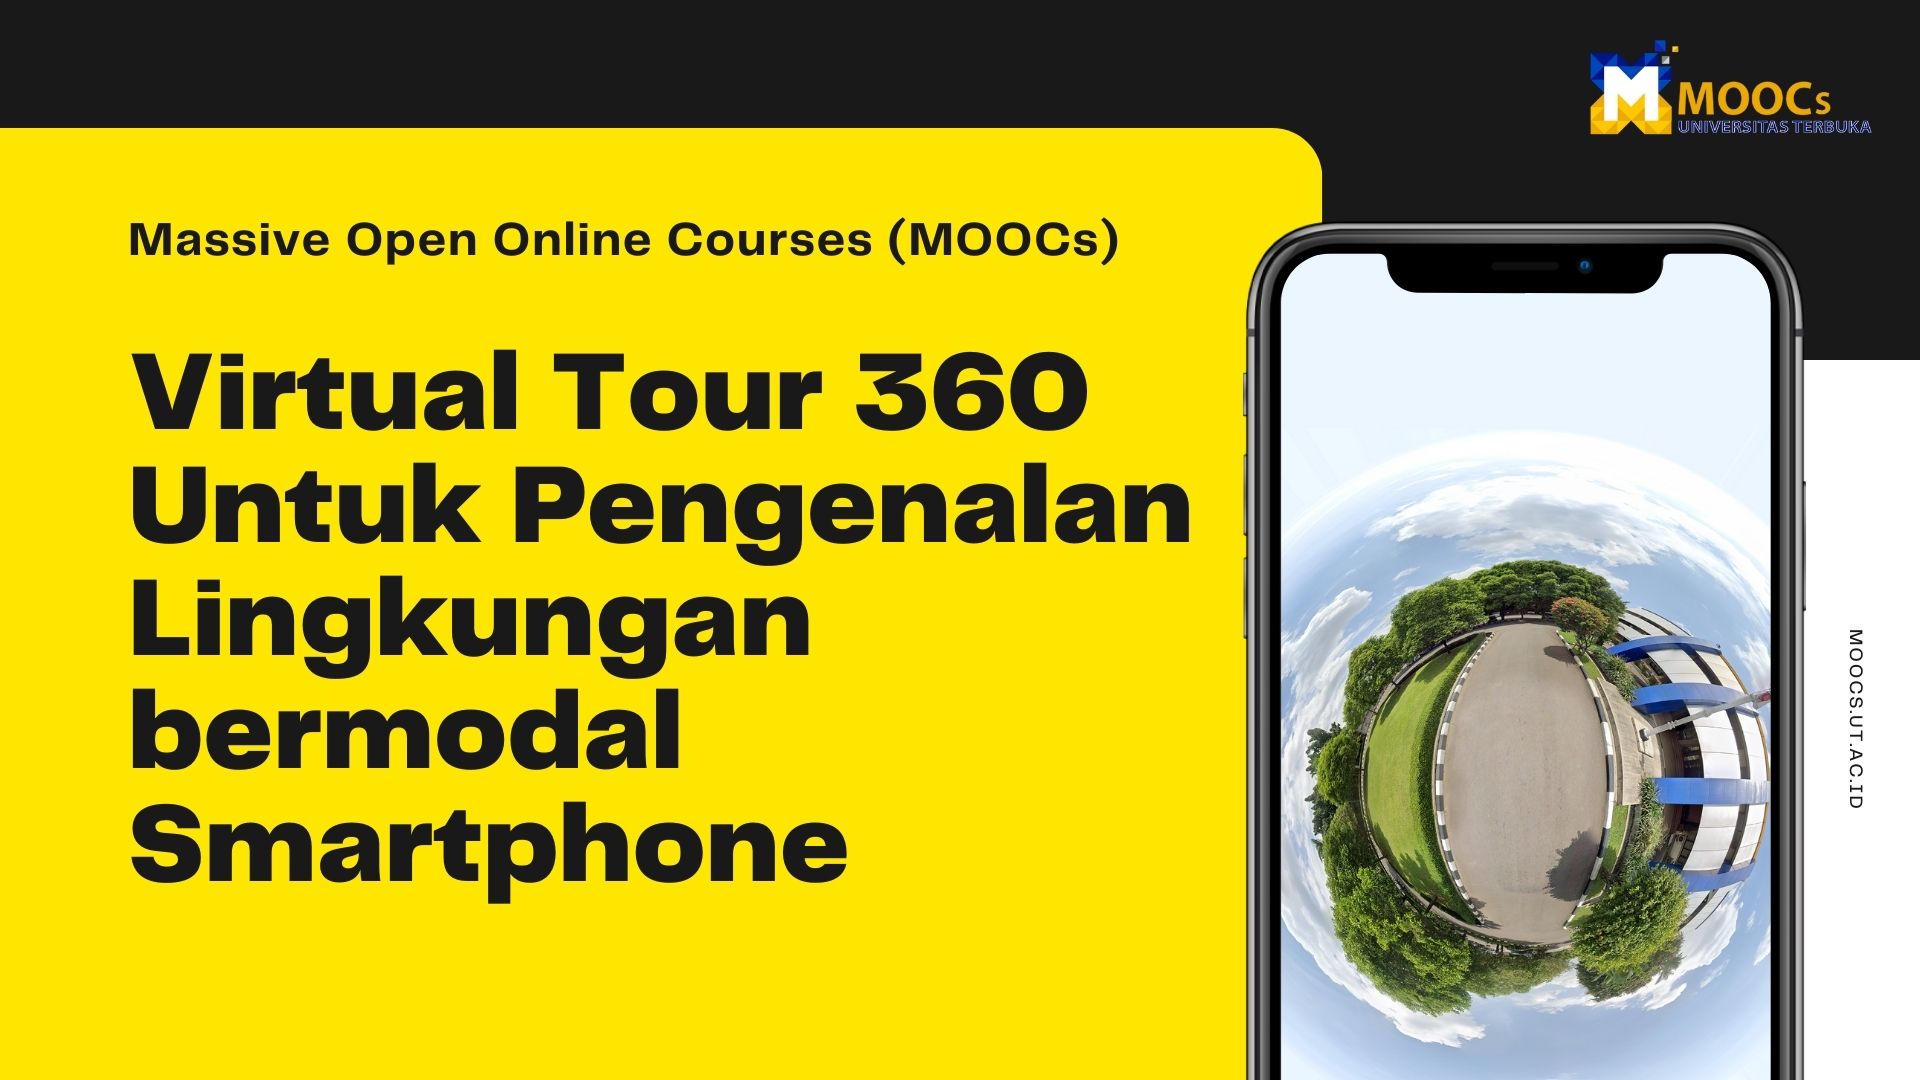 Virtual Tour 360 Untuk Pengenalan Lingkungan bermodal Smartphone